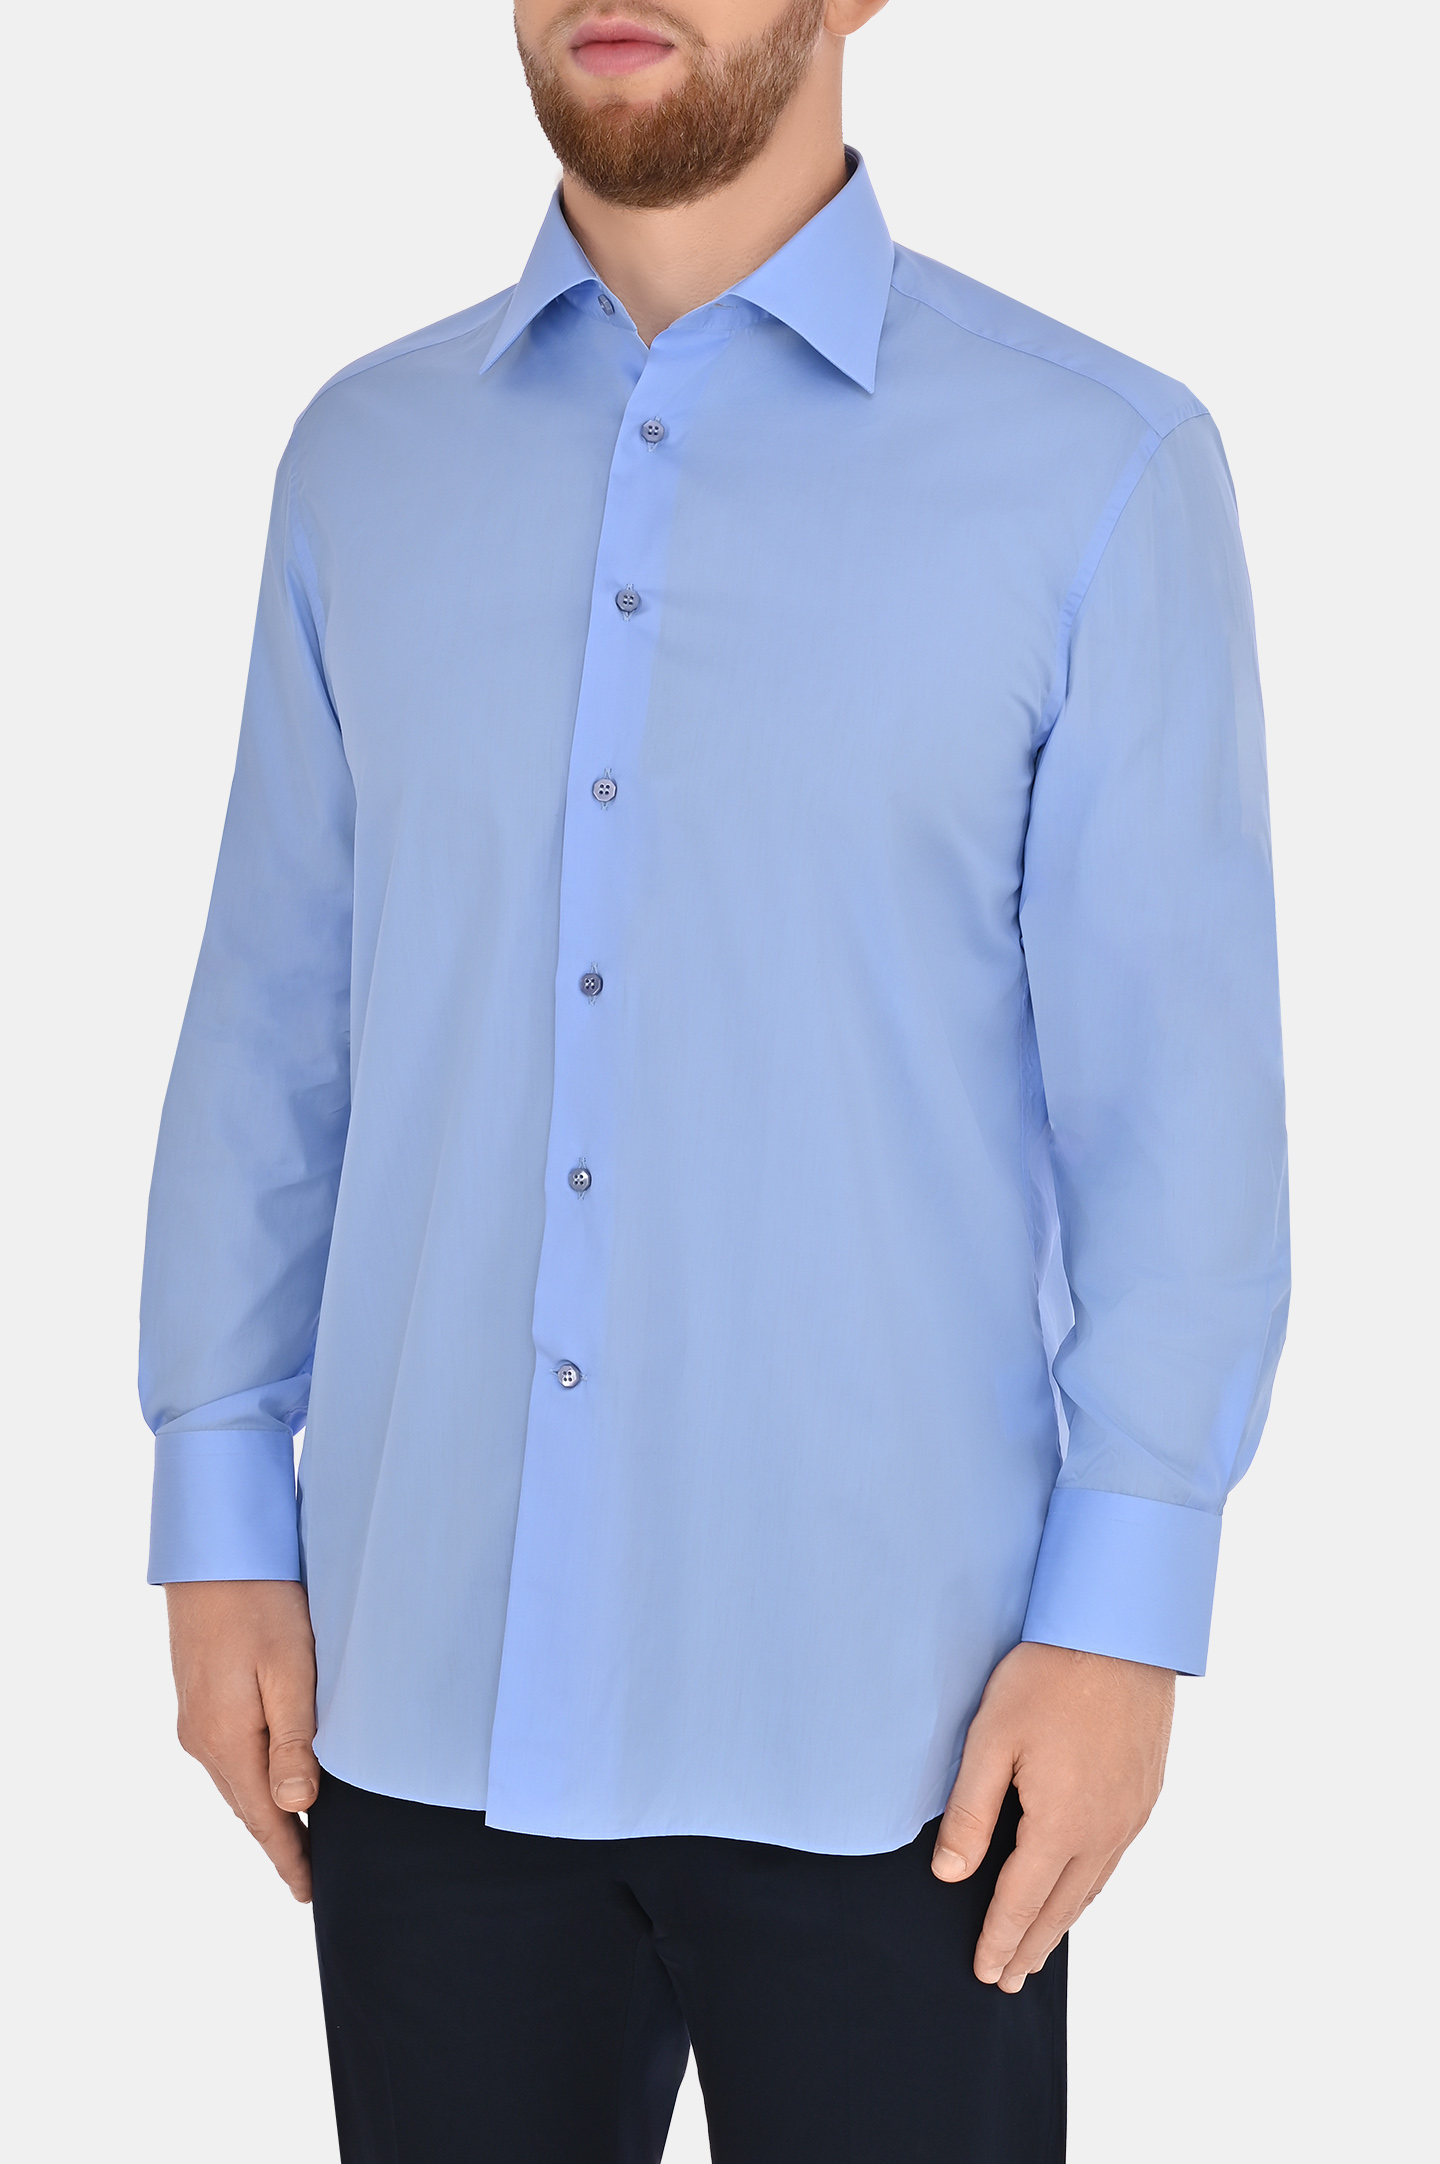 Рубашка STEFANO RICCI MC003678 A304, цвет: Голубой, Мужской